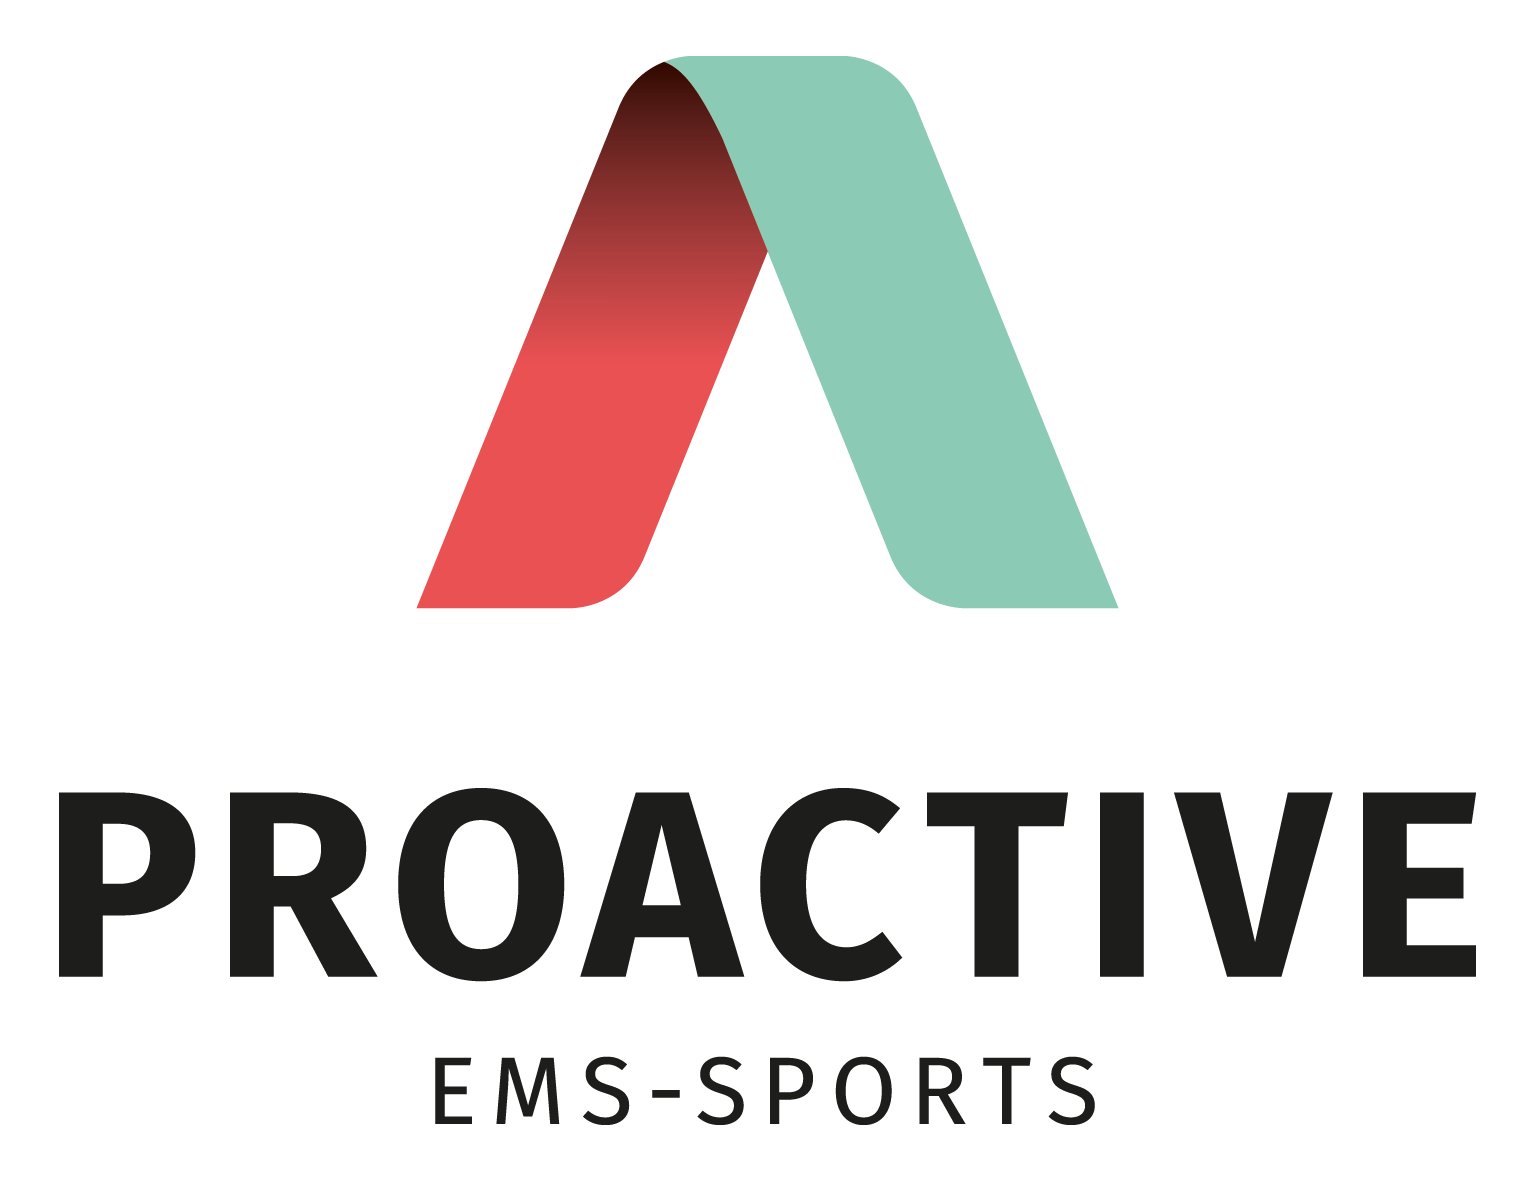  PROACTIVE EMS-SPORTS Logo